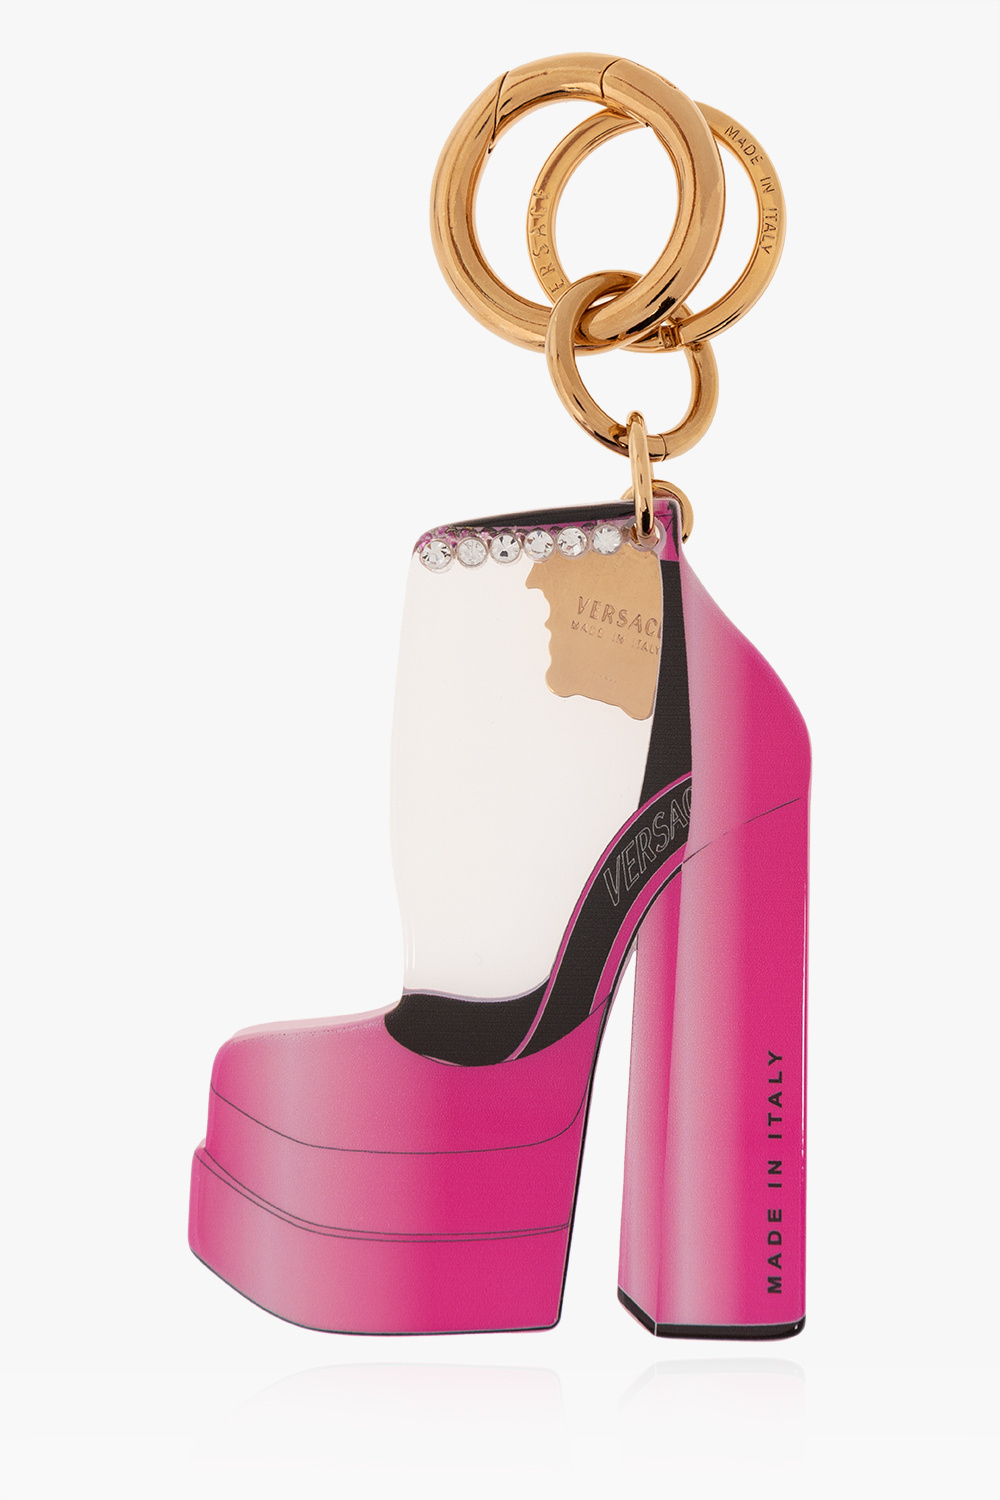 Versace V763-03-2 shoe-shaped keyring